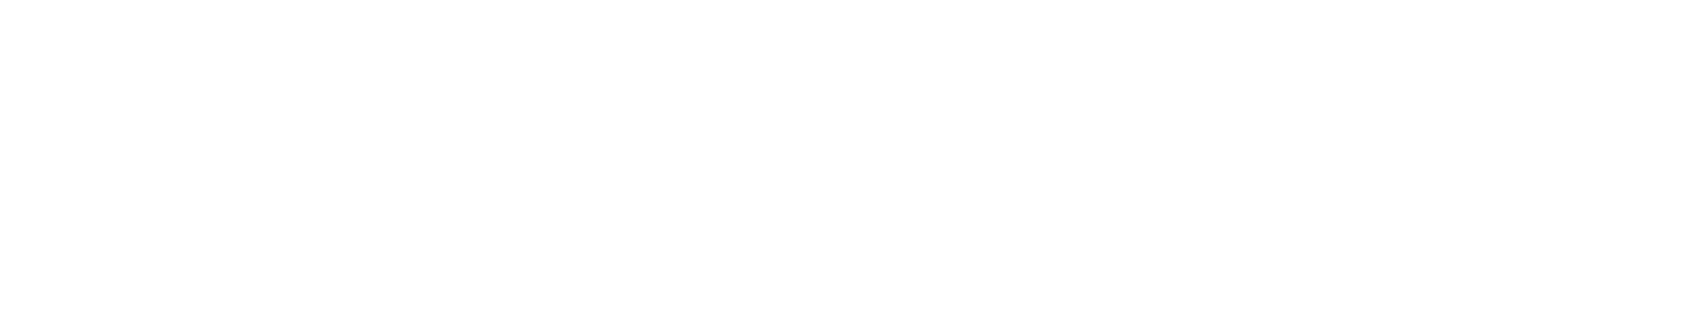 Logo Durchblick